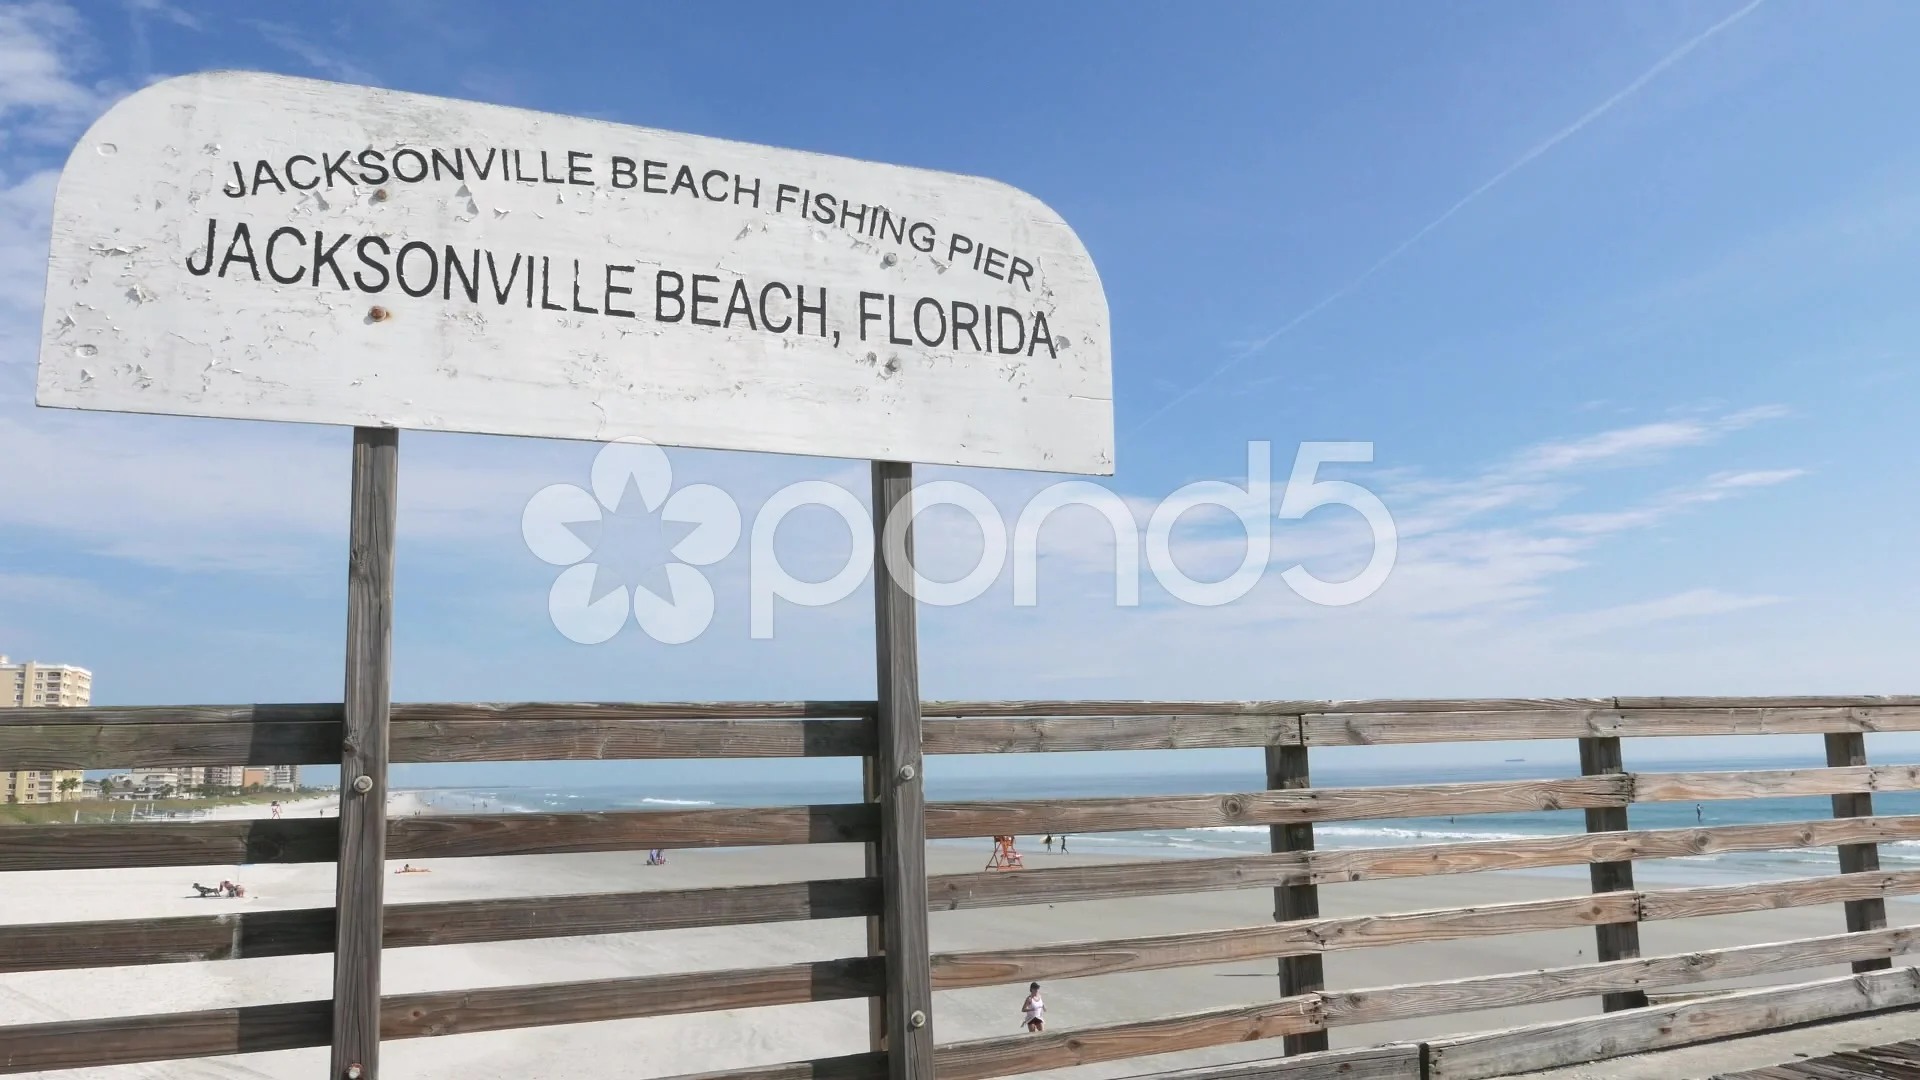 https://images.pond5.com/jacksonville-beach-florida-fishing-pier-055384375_prevstill.jpeg